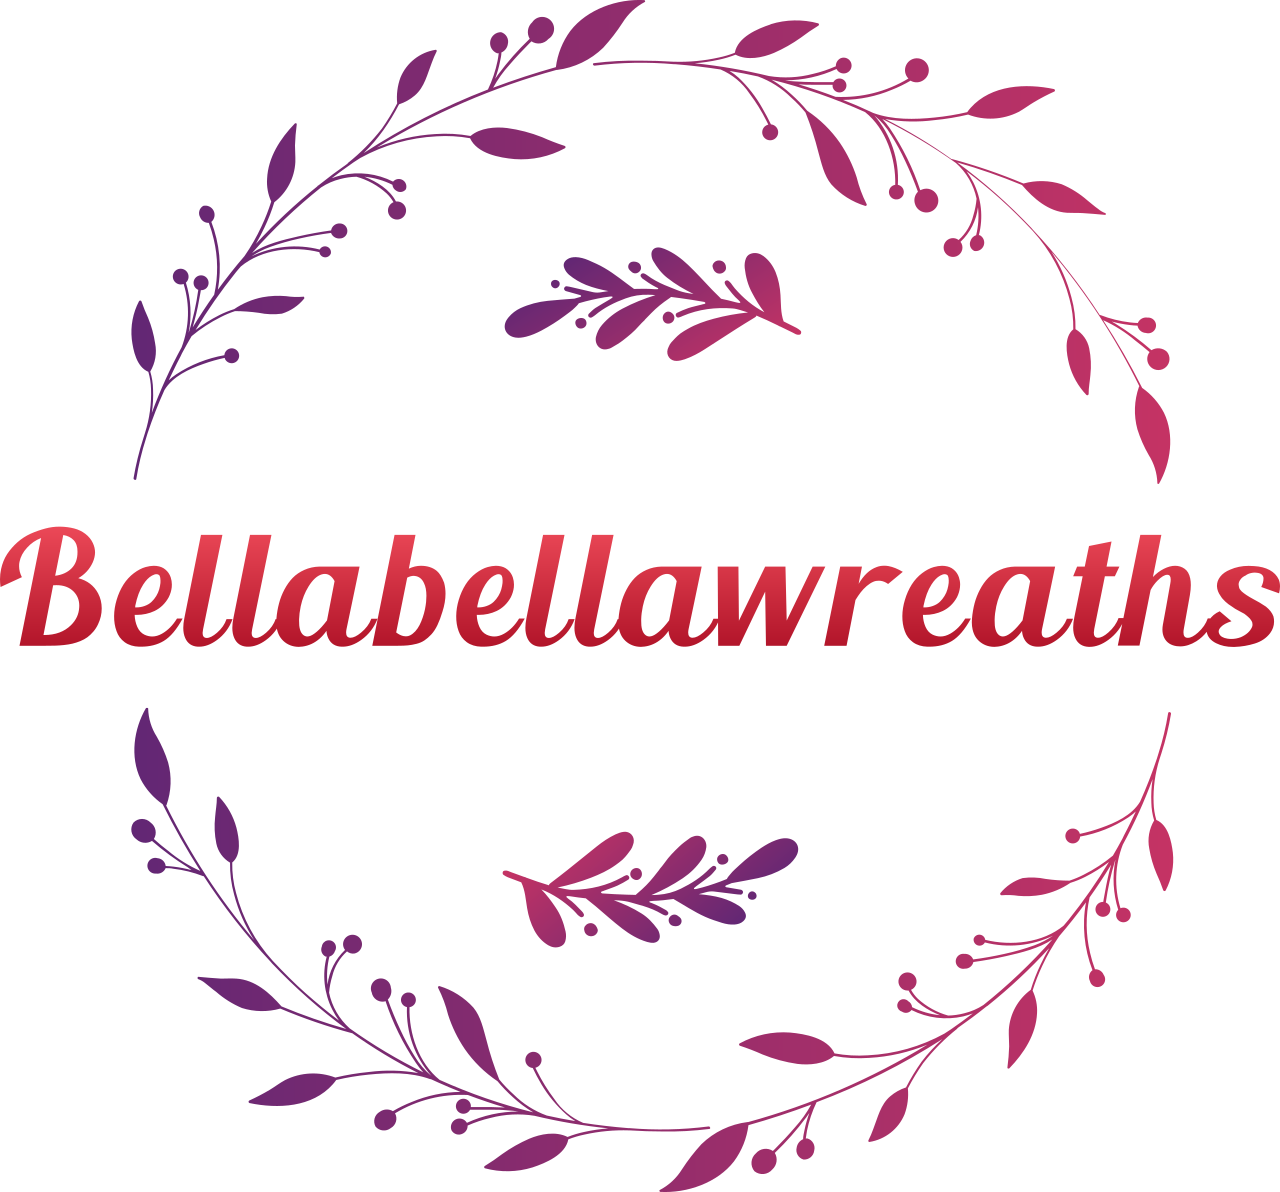 Bellabellawreaths's logo